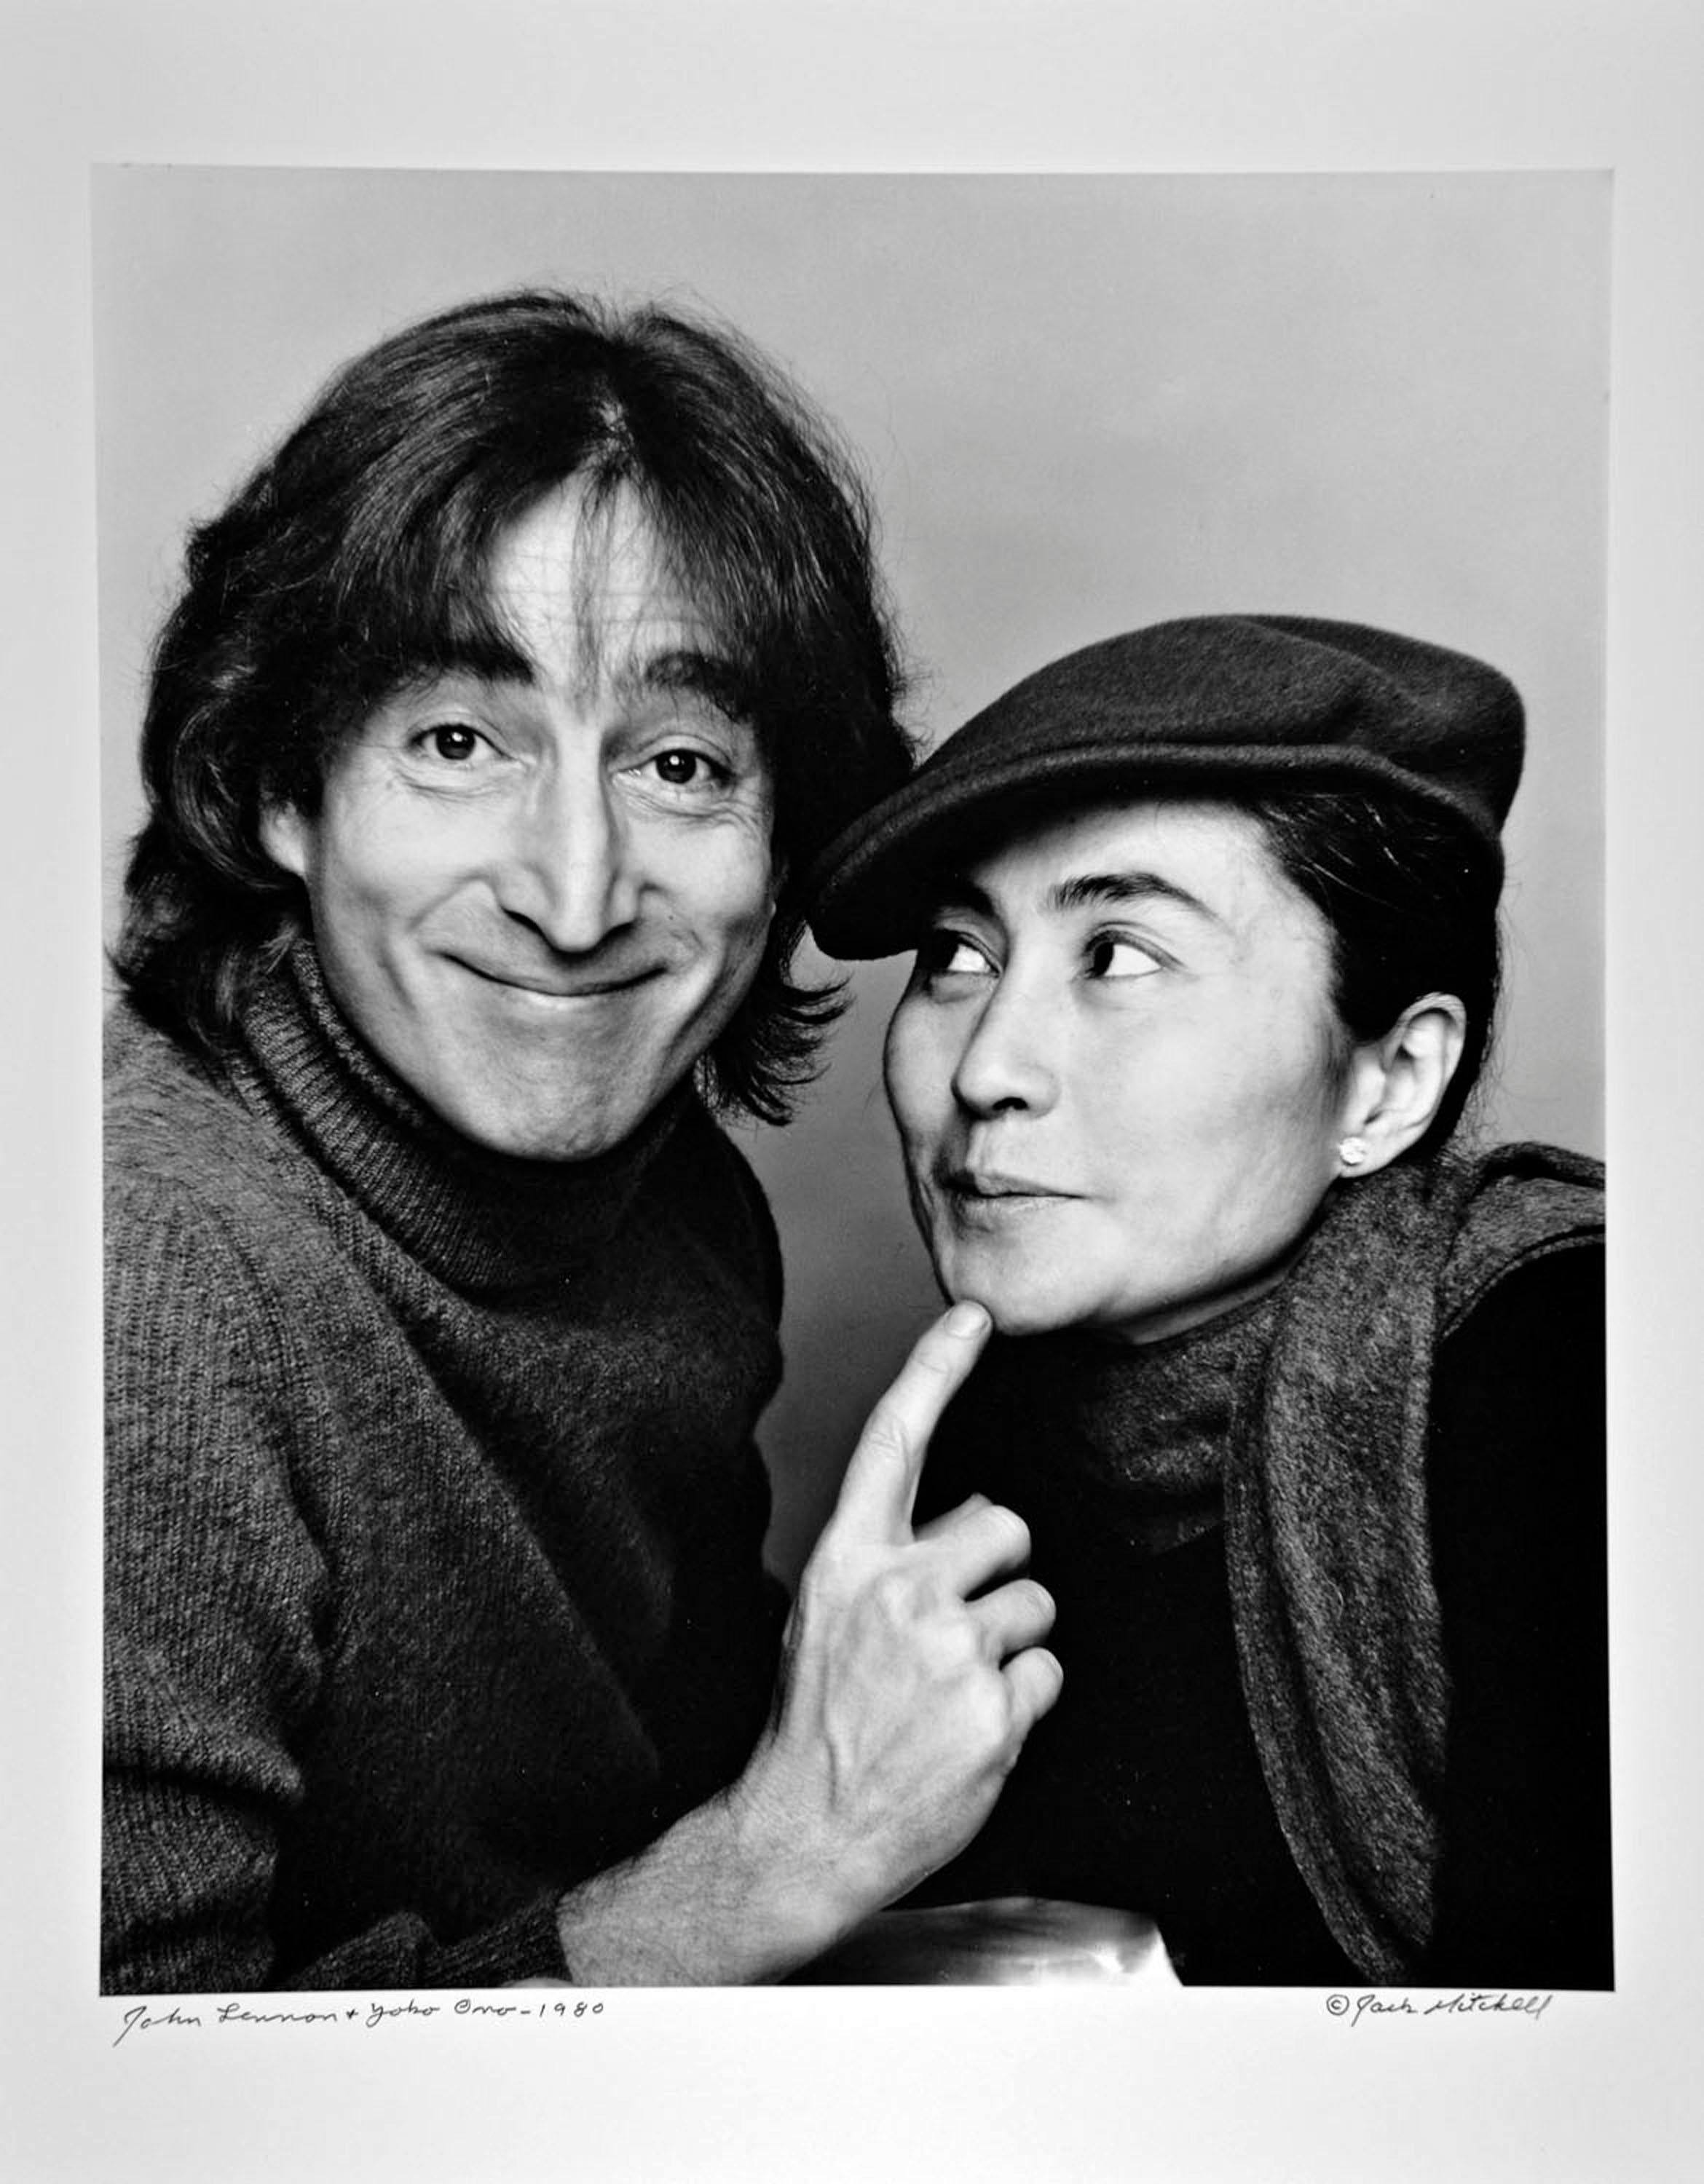 John Lennon and Yoko Ono, Photographed November 2, 1980, Signed